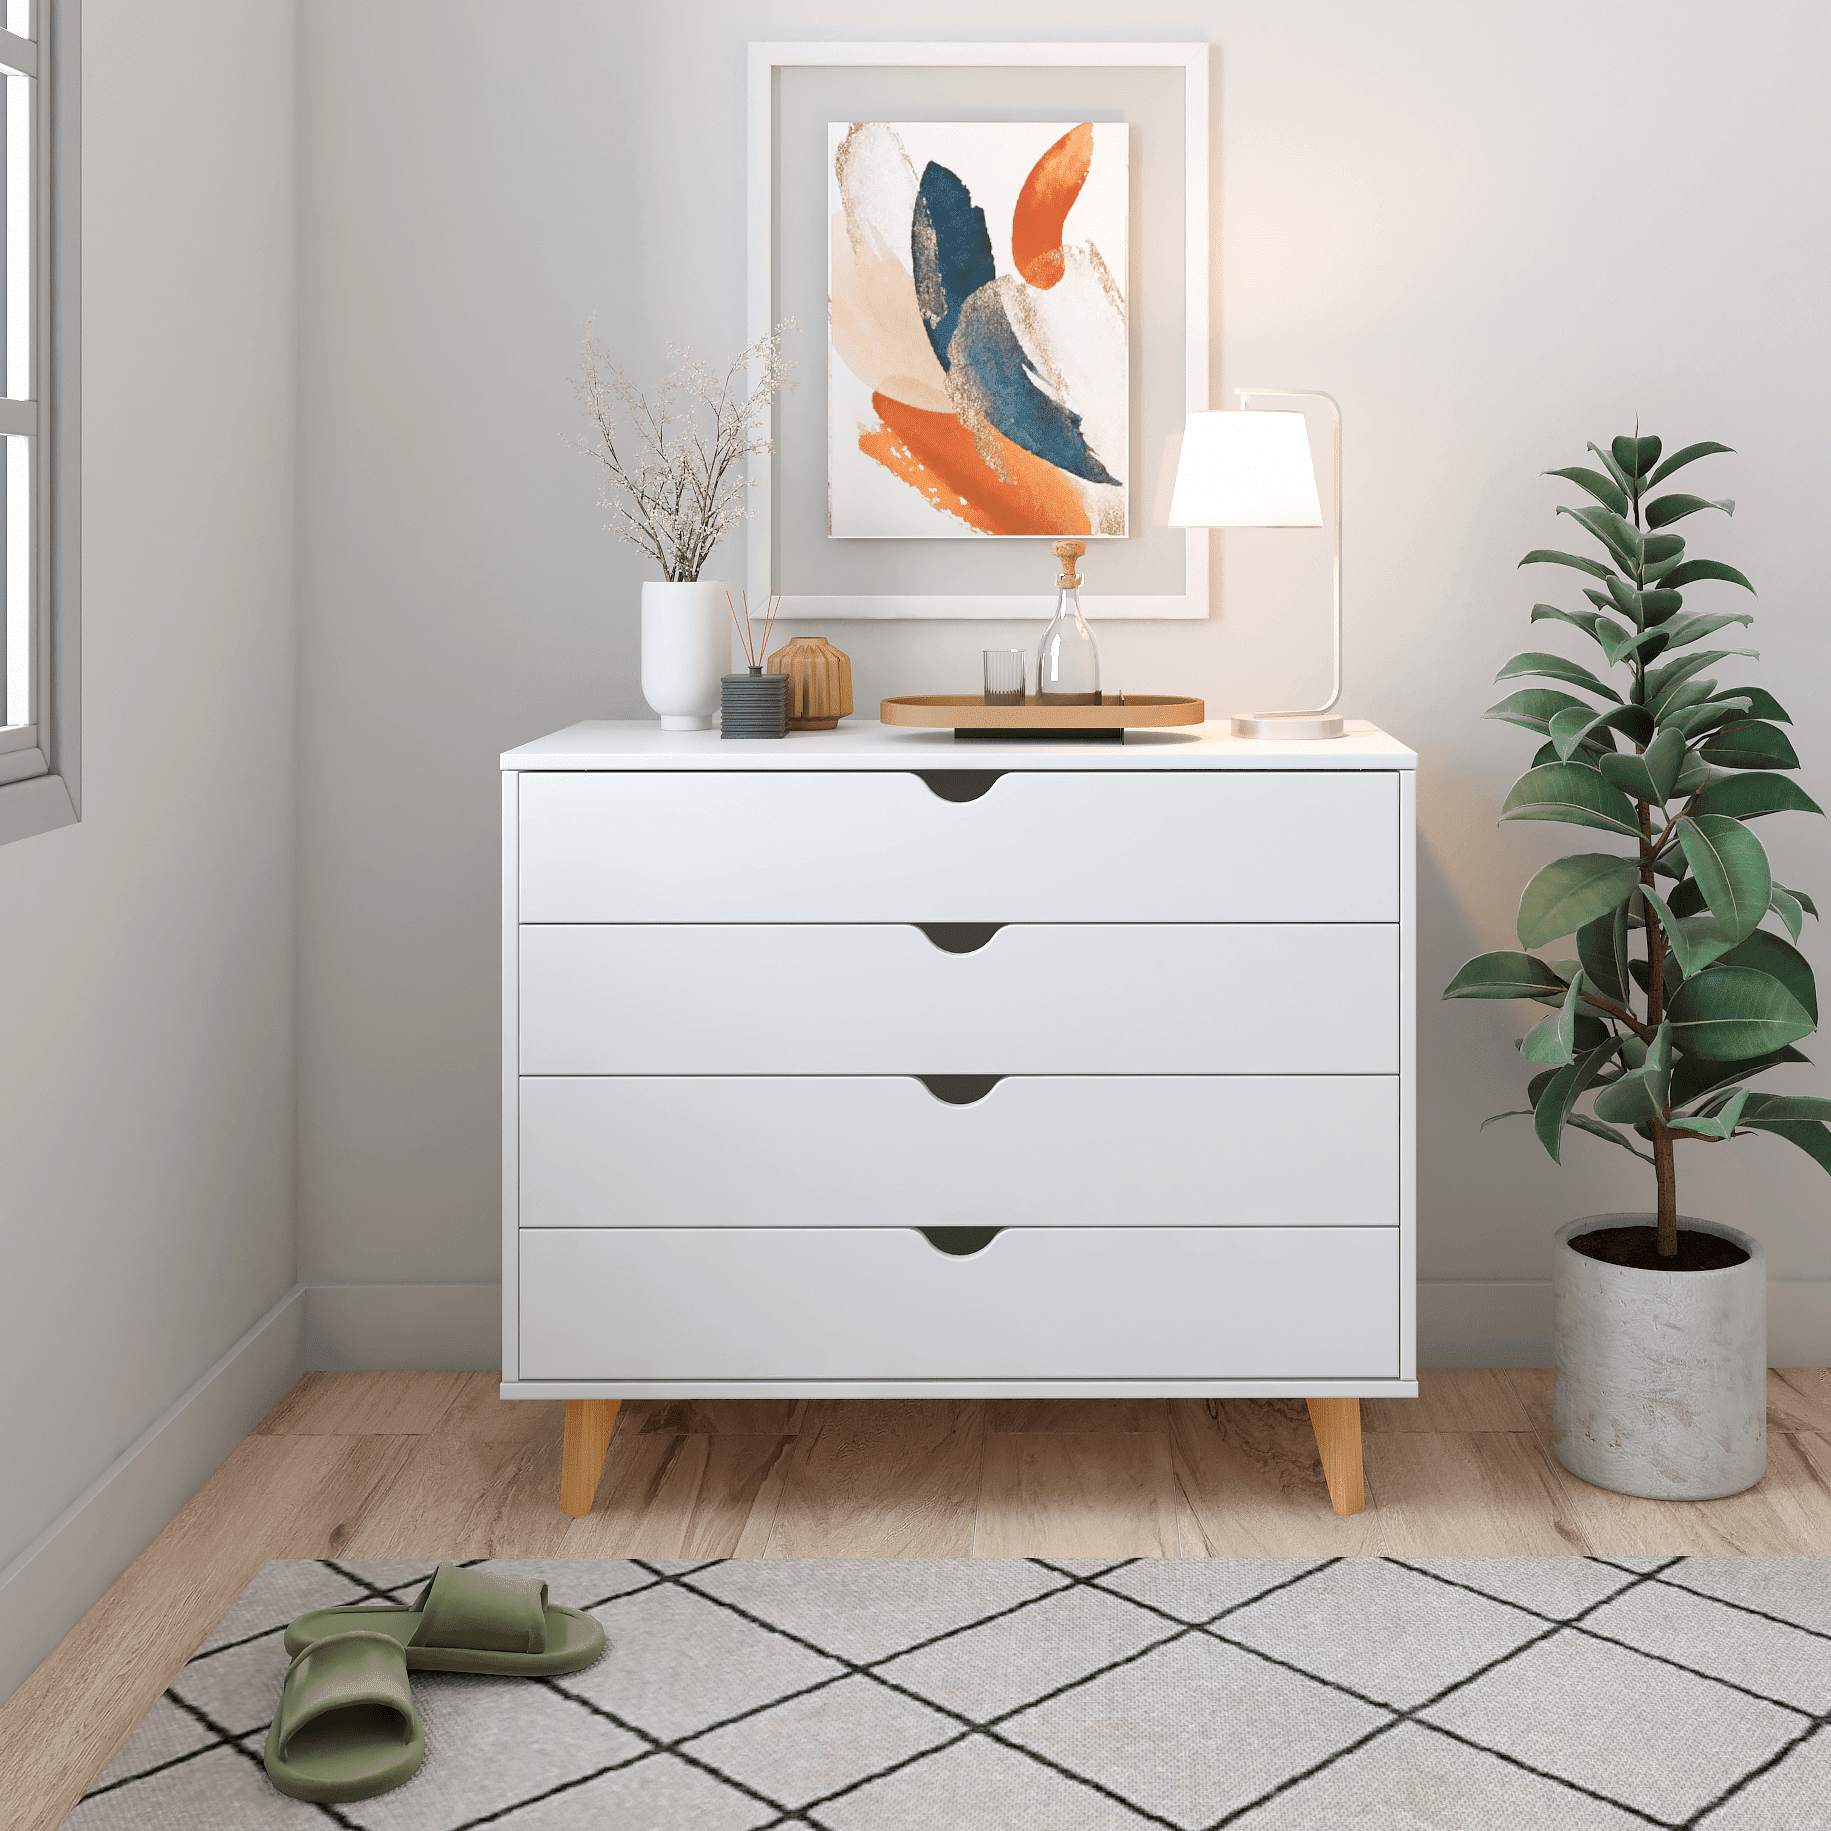 Falkk Furniture – Minimalist 4-Drawer 1-Door Dresser – Solid & Sustainable Reforestation Wood Organizer – Black, White, or Natural Wood – Versatile